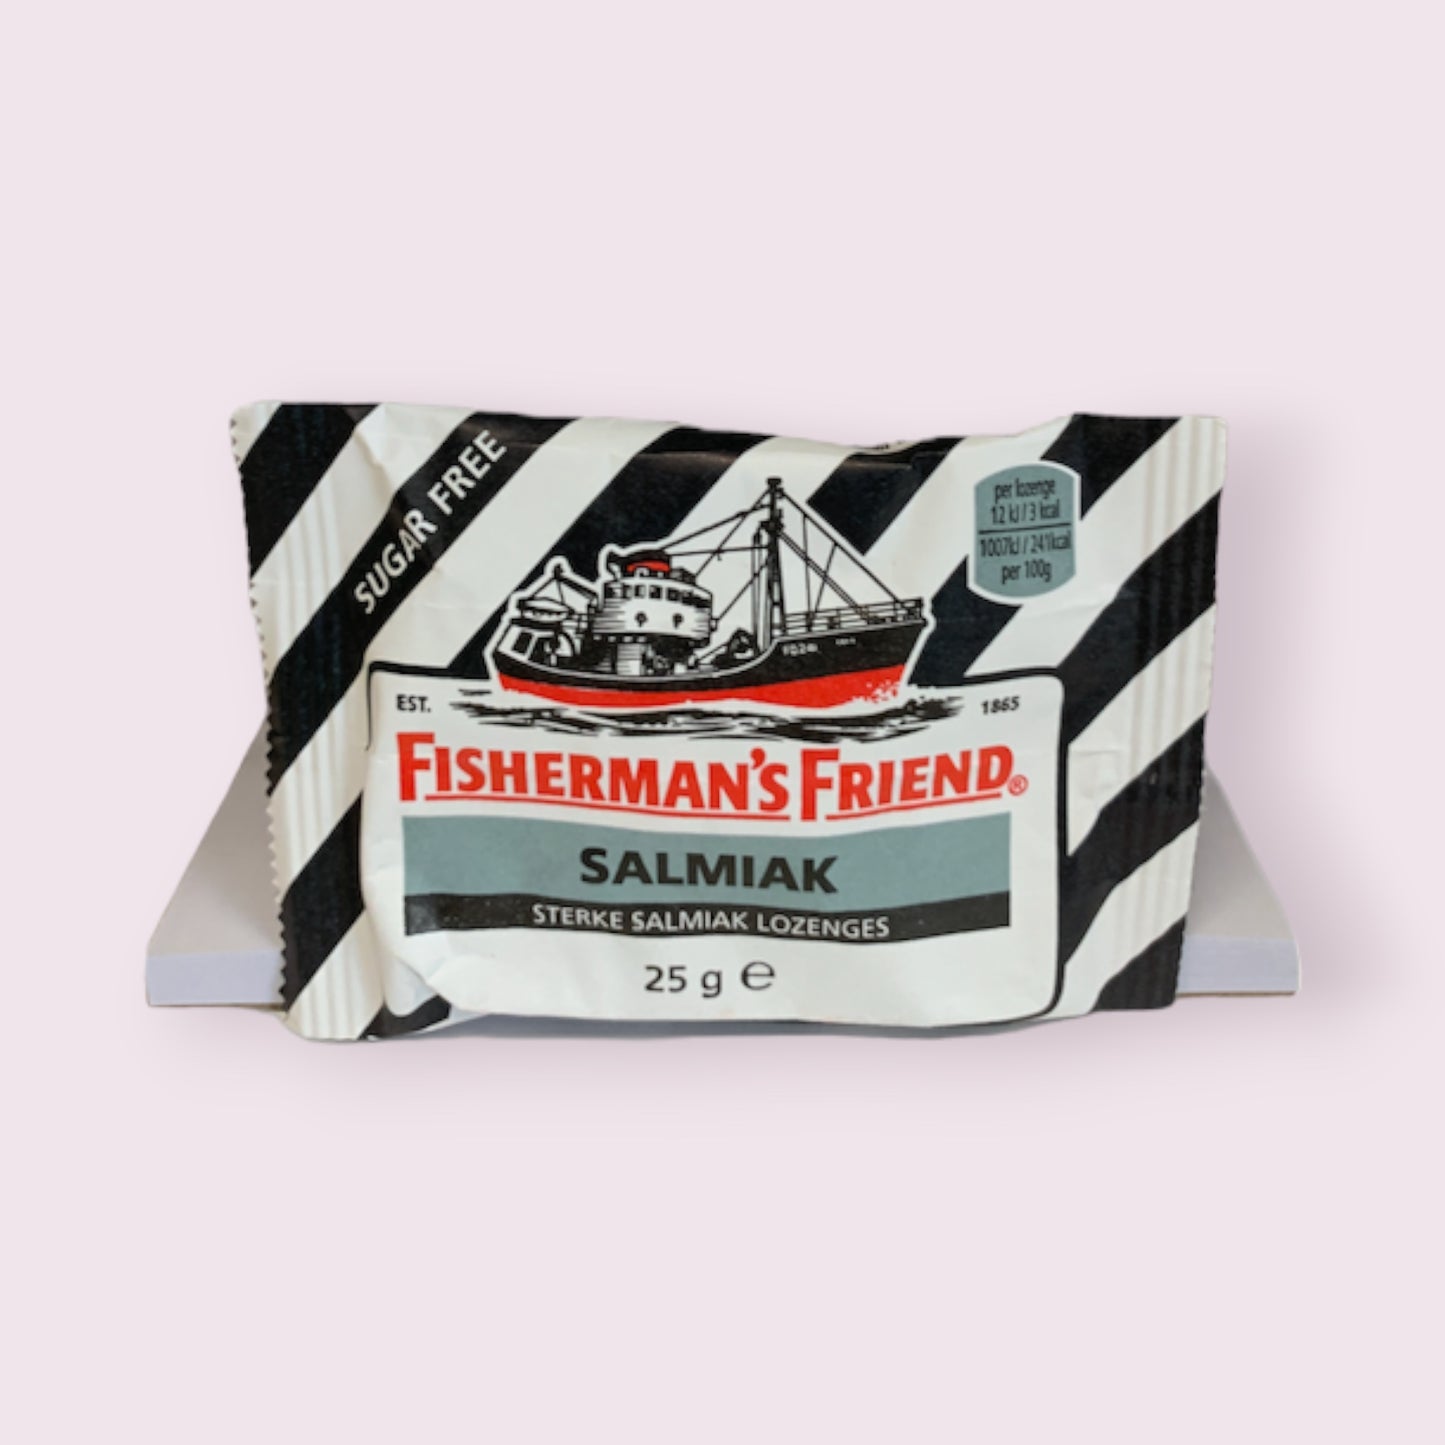 Fisherman’s Friends Salmiak Pack  Pixie Candy Shoppe   